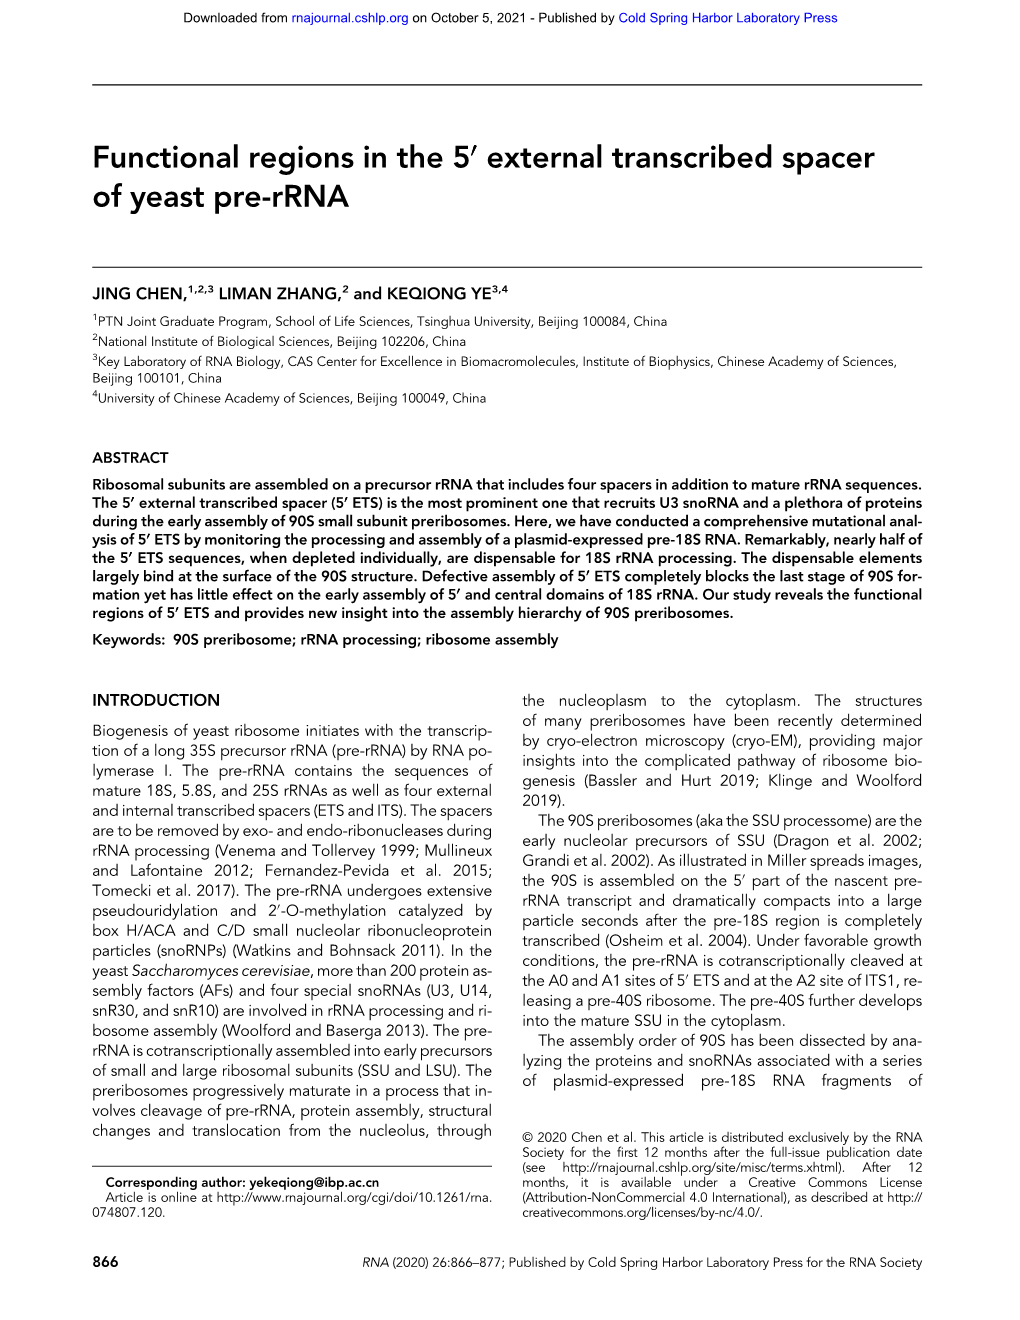 Functional Regions in the 5′ External Transcribed Spacer of Yeast Pre-Rrna